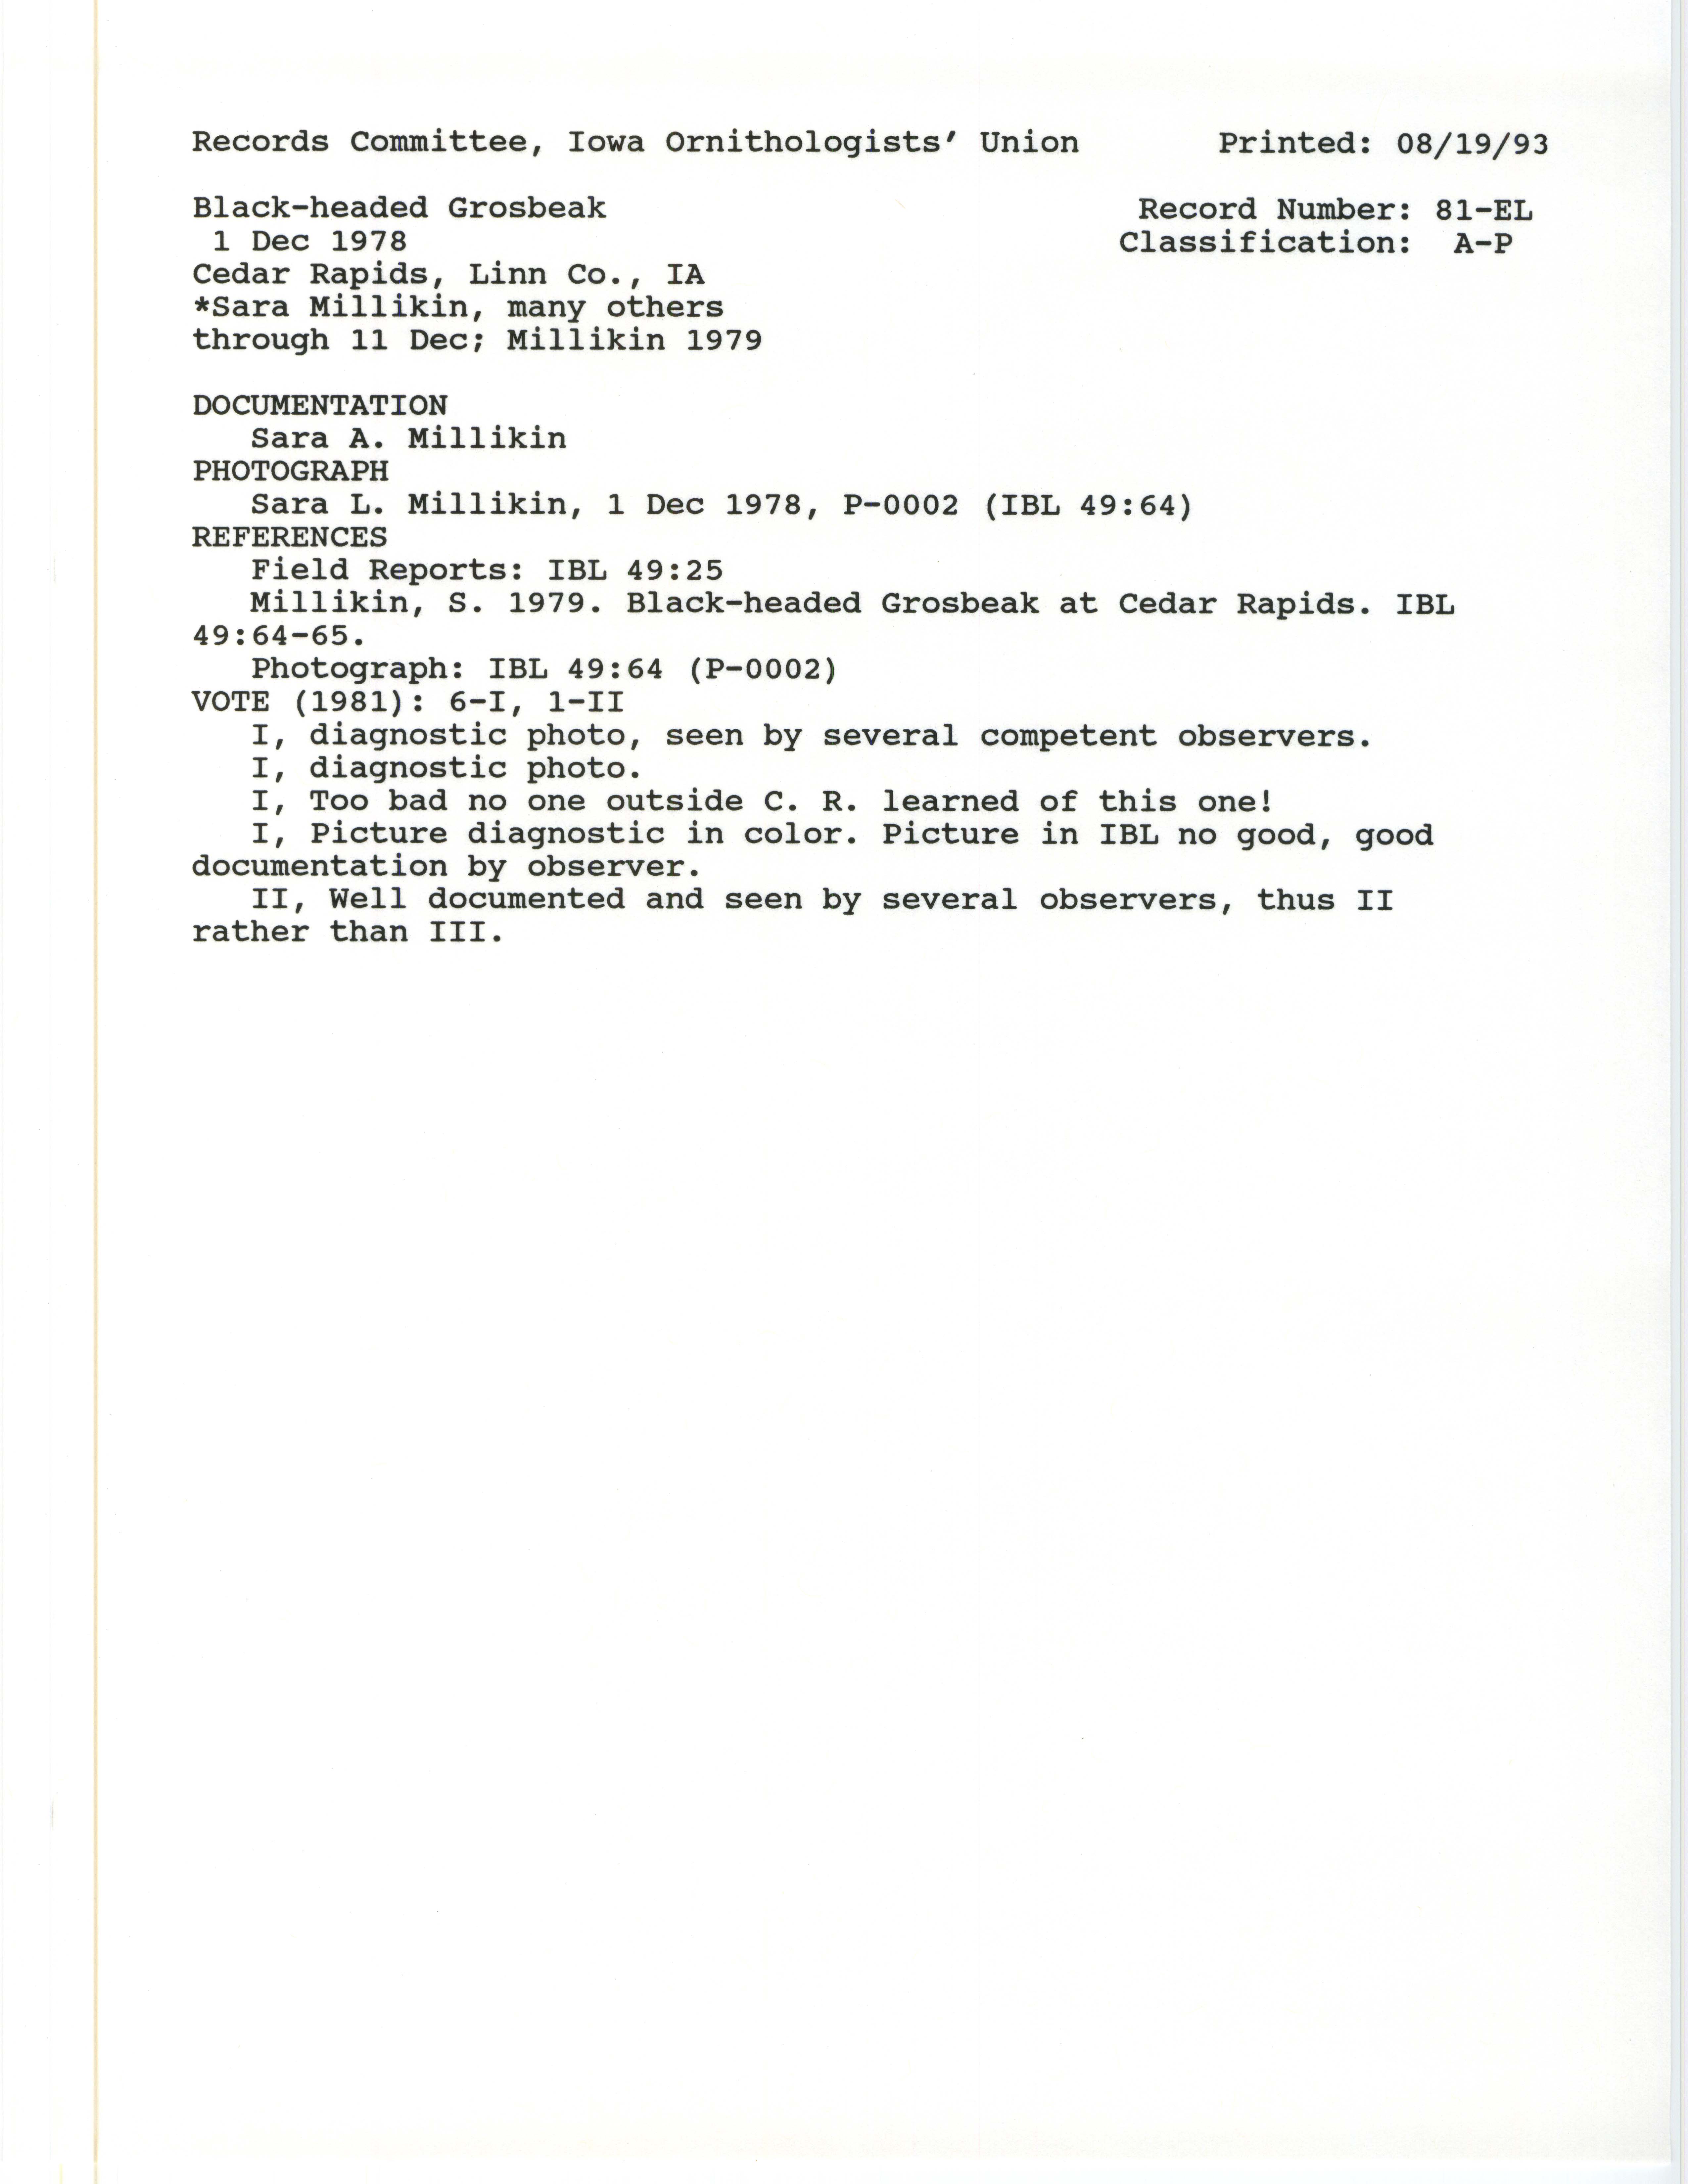 Records Committee review for rare bird sighting for Black-headed Grosbeak at Cedar Rapids, 1978